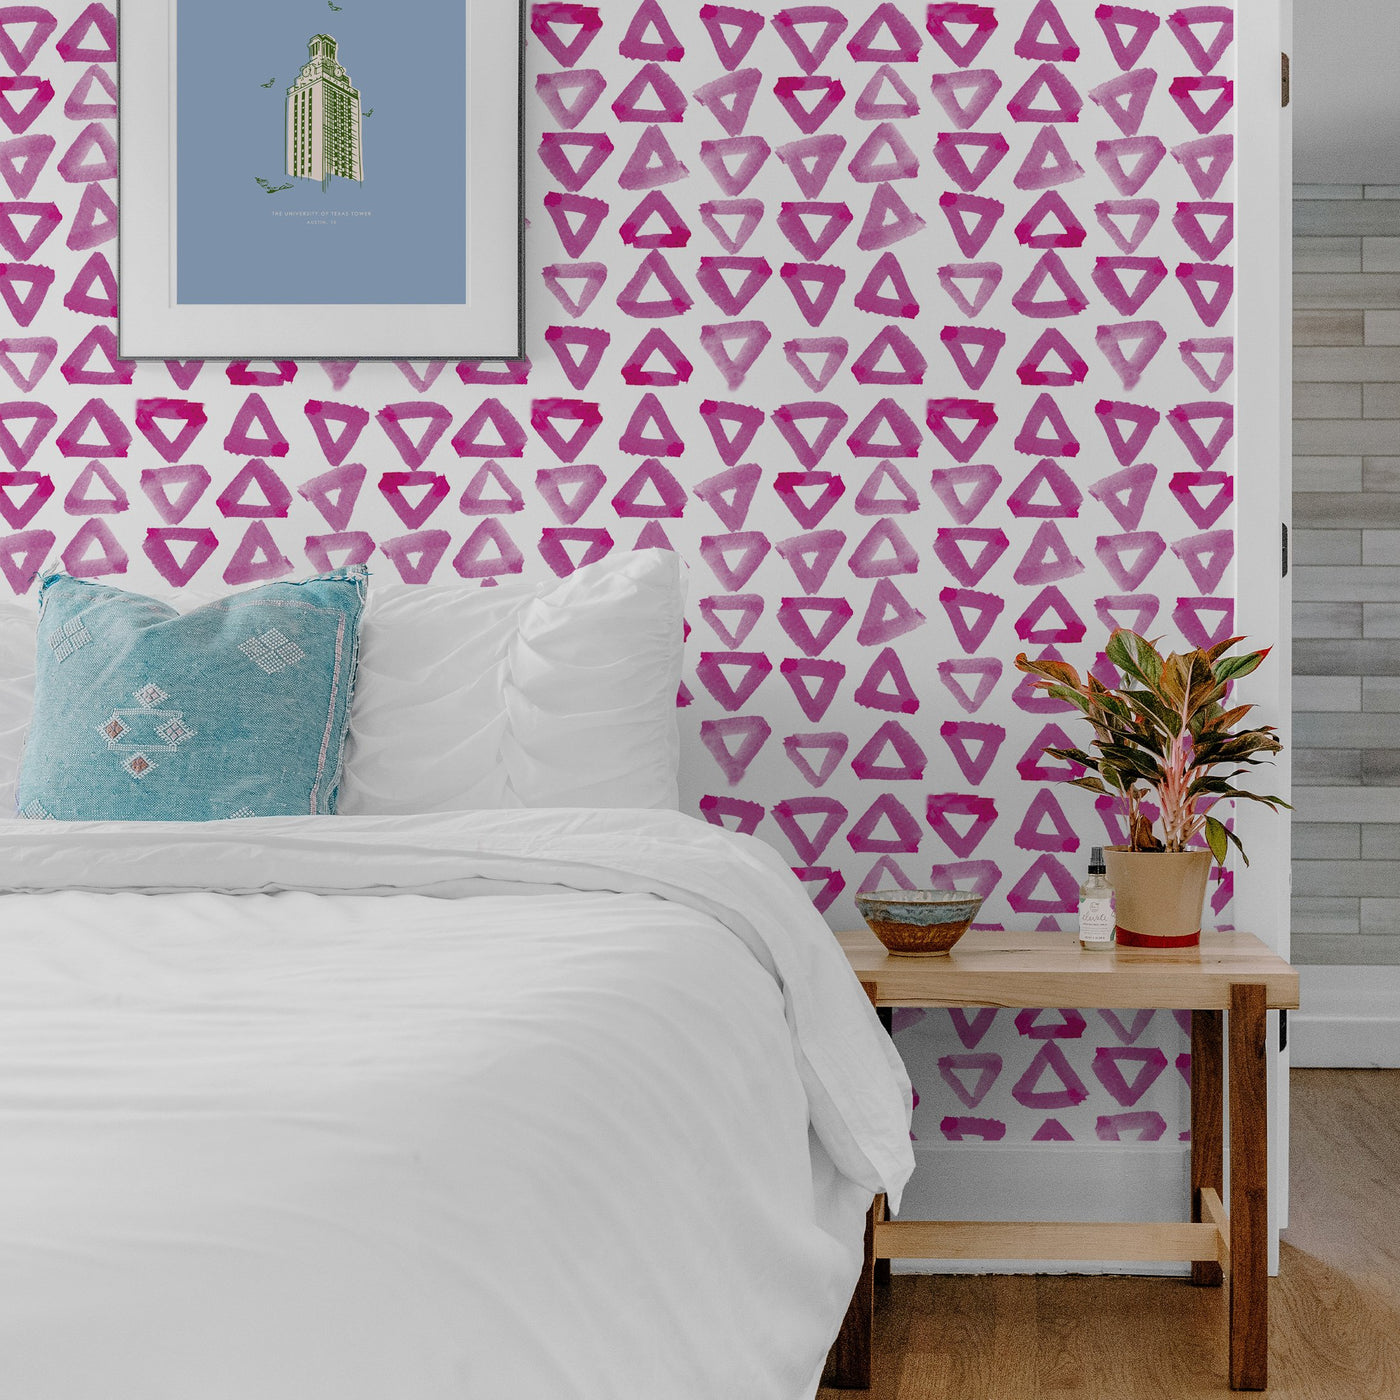 Peel & Stick Wallpaper Triangles Peel & Stick Wallpaper Katie Kime Design